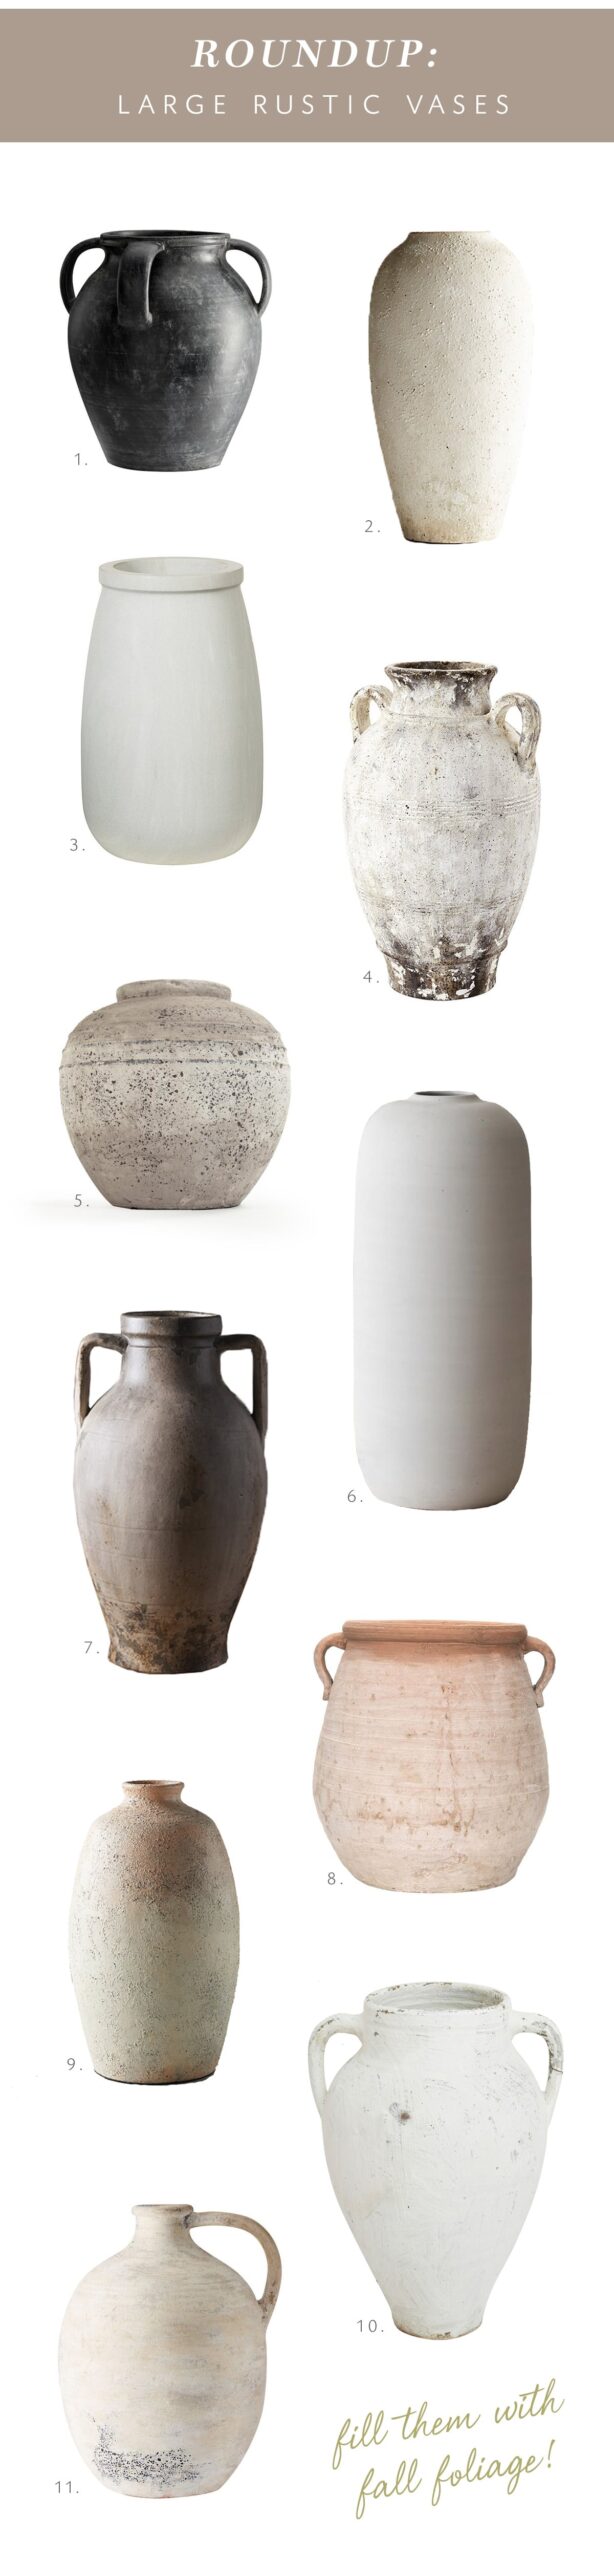 large rustic vase urn roundup